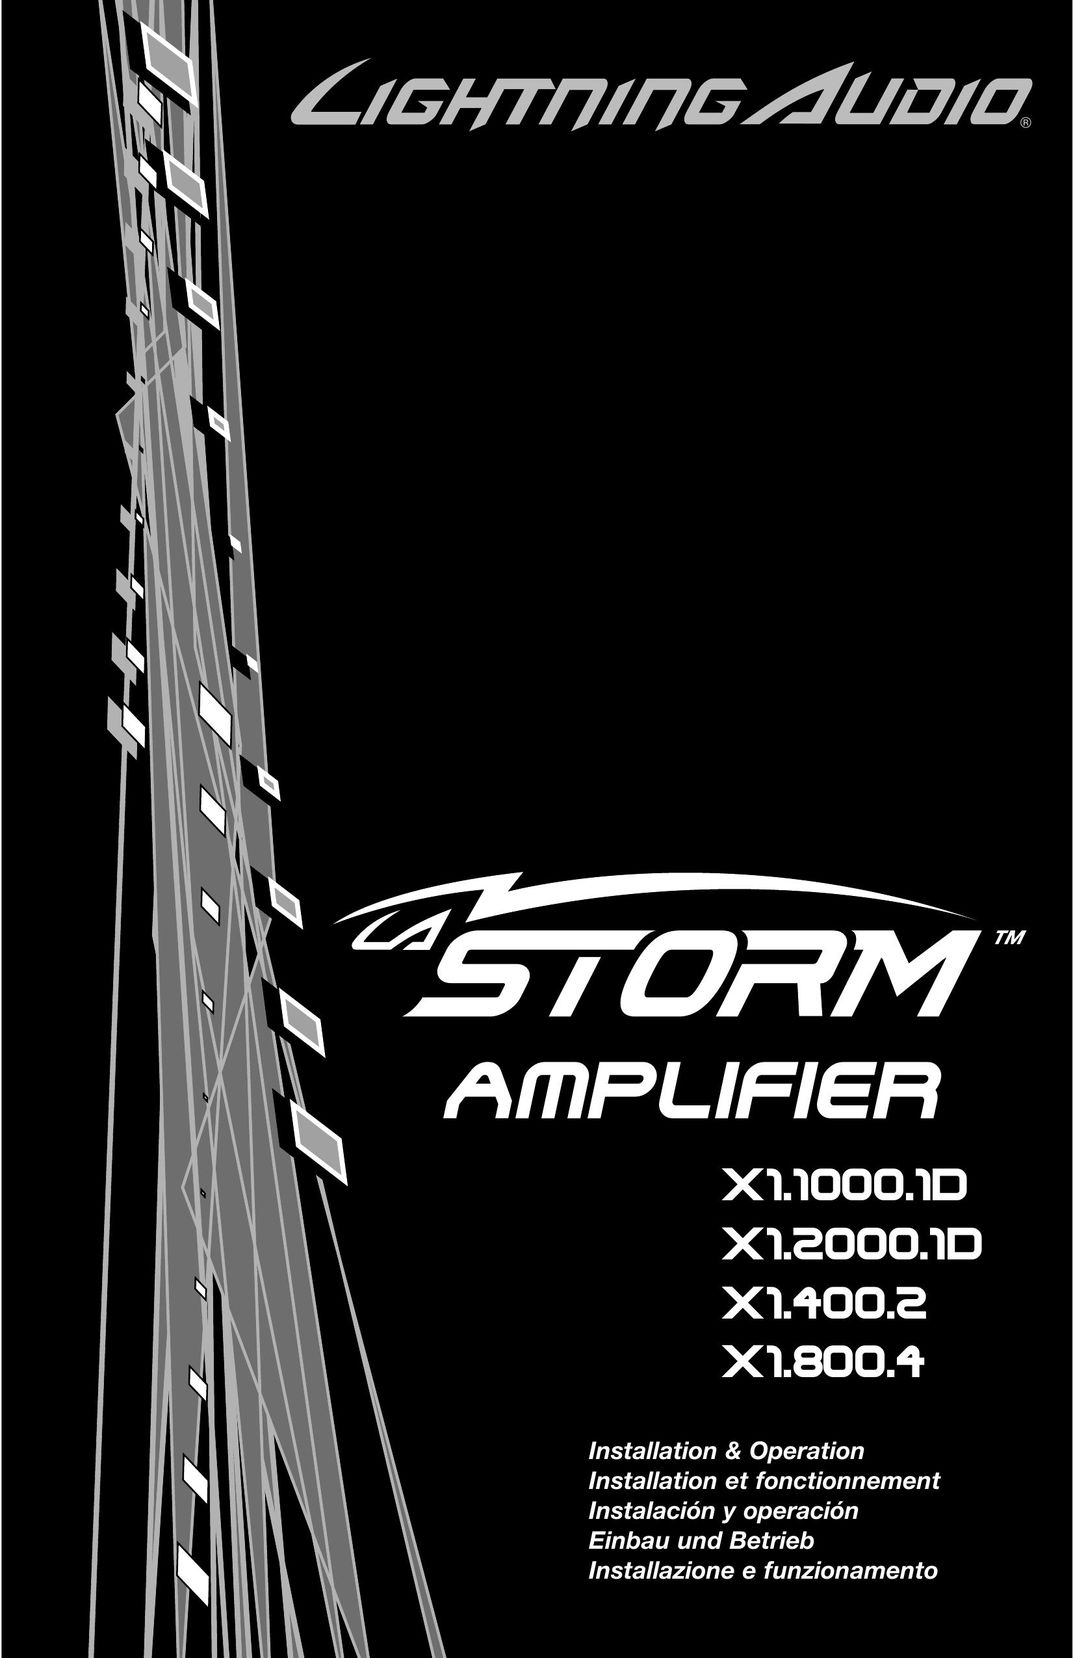 Lightning Audio X1.400.2 Stereo Amplifier User Manual